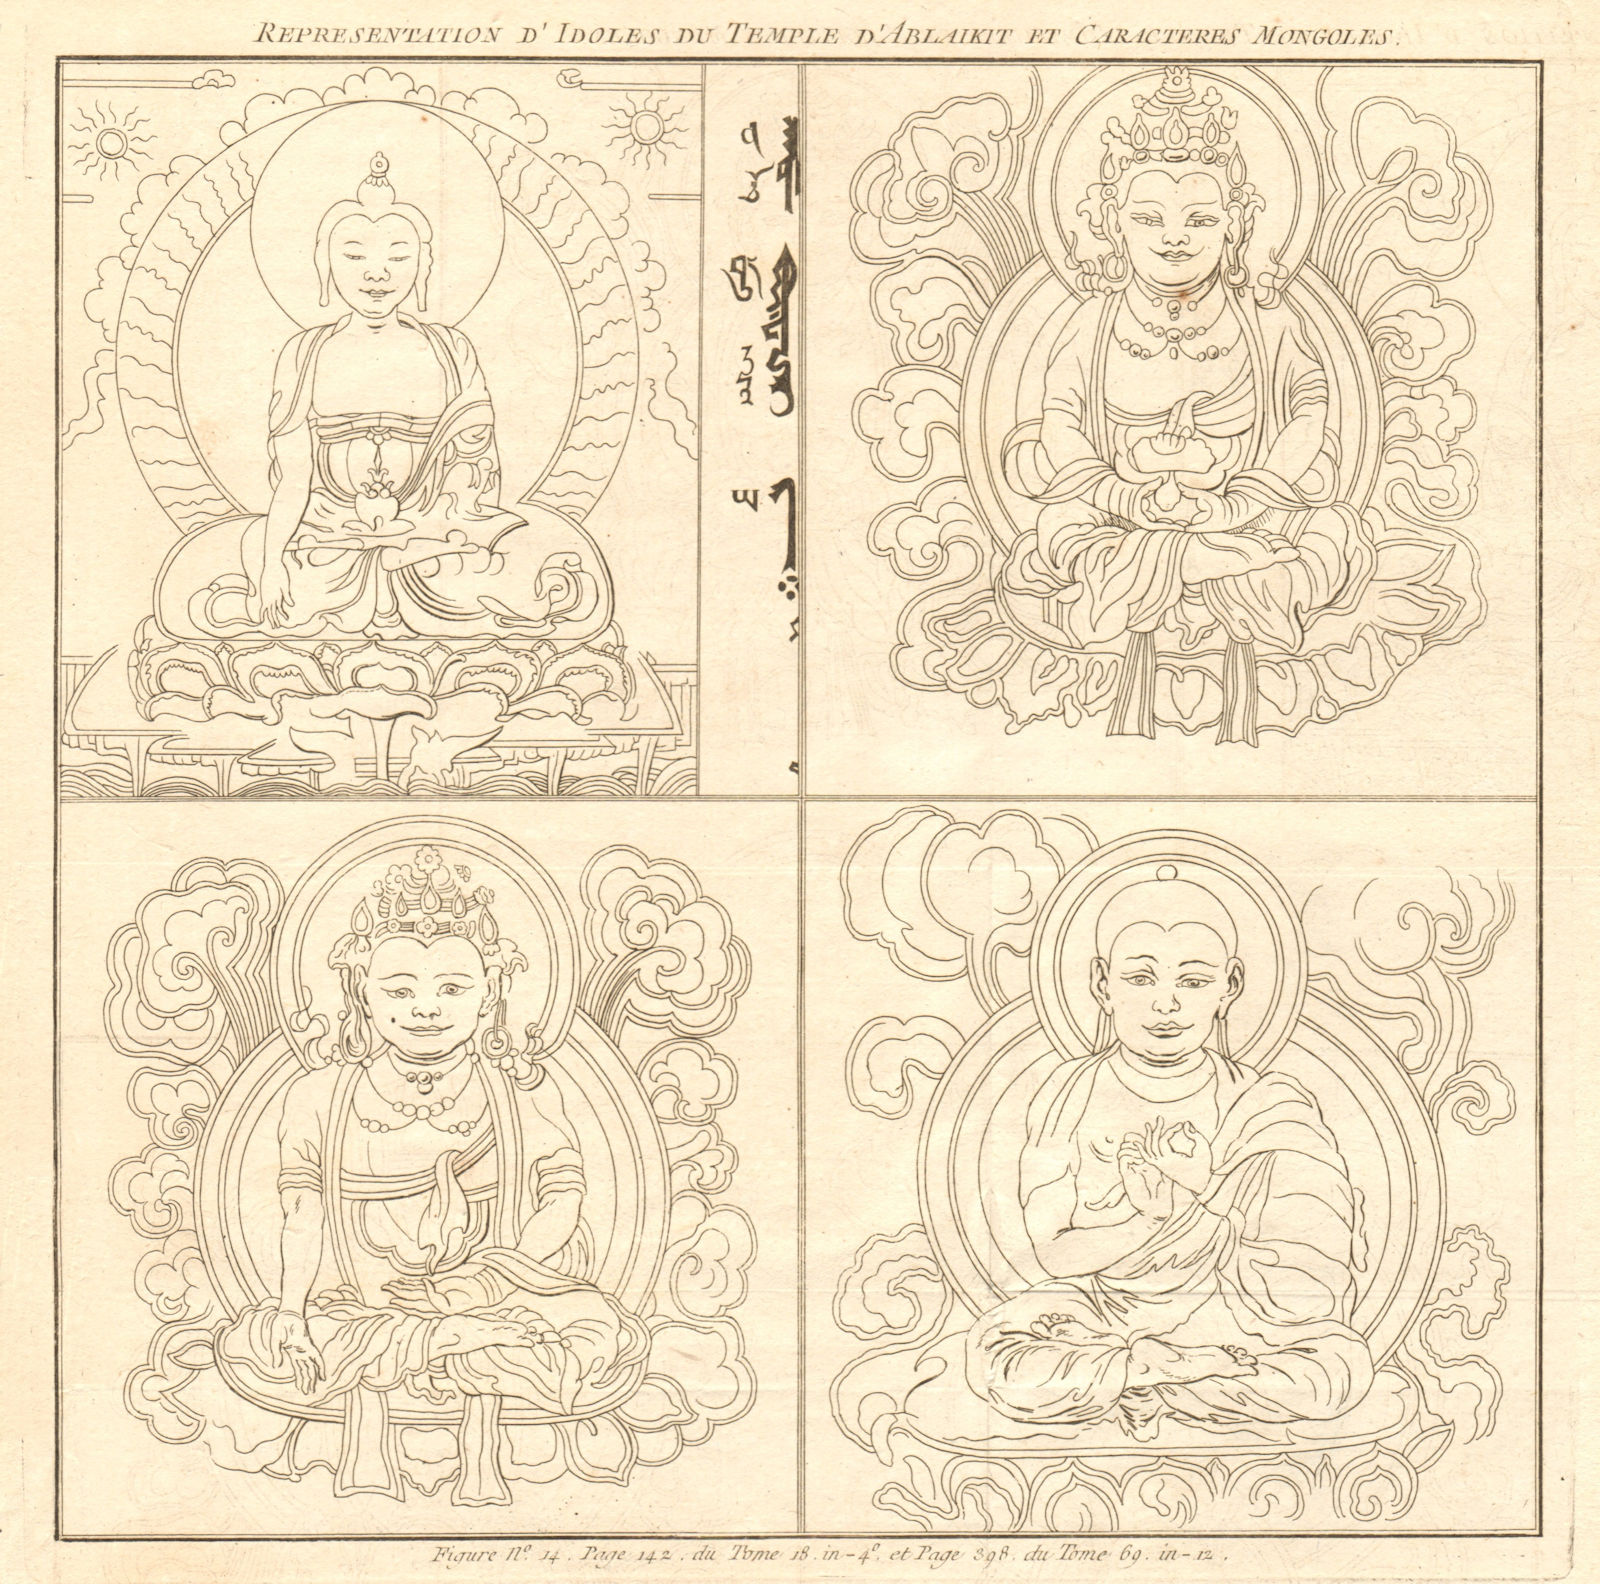 Associate Product 'Idoles du Temple d'Ablaikit'. Ablaykit buddhist temple idols. Kazakhstan 1768